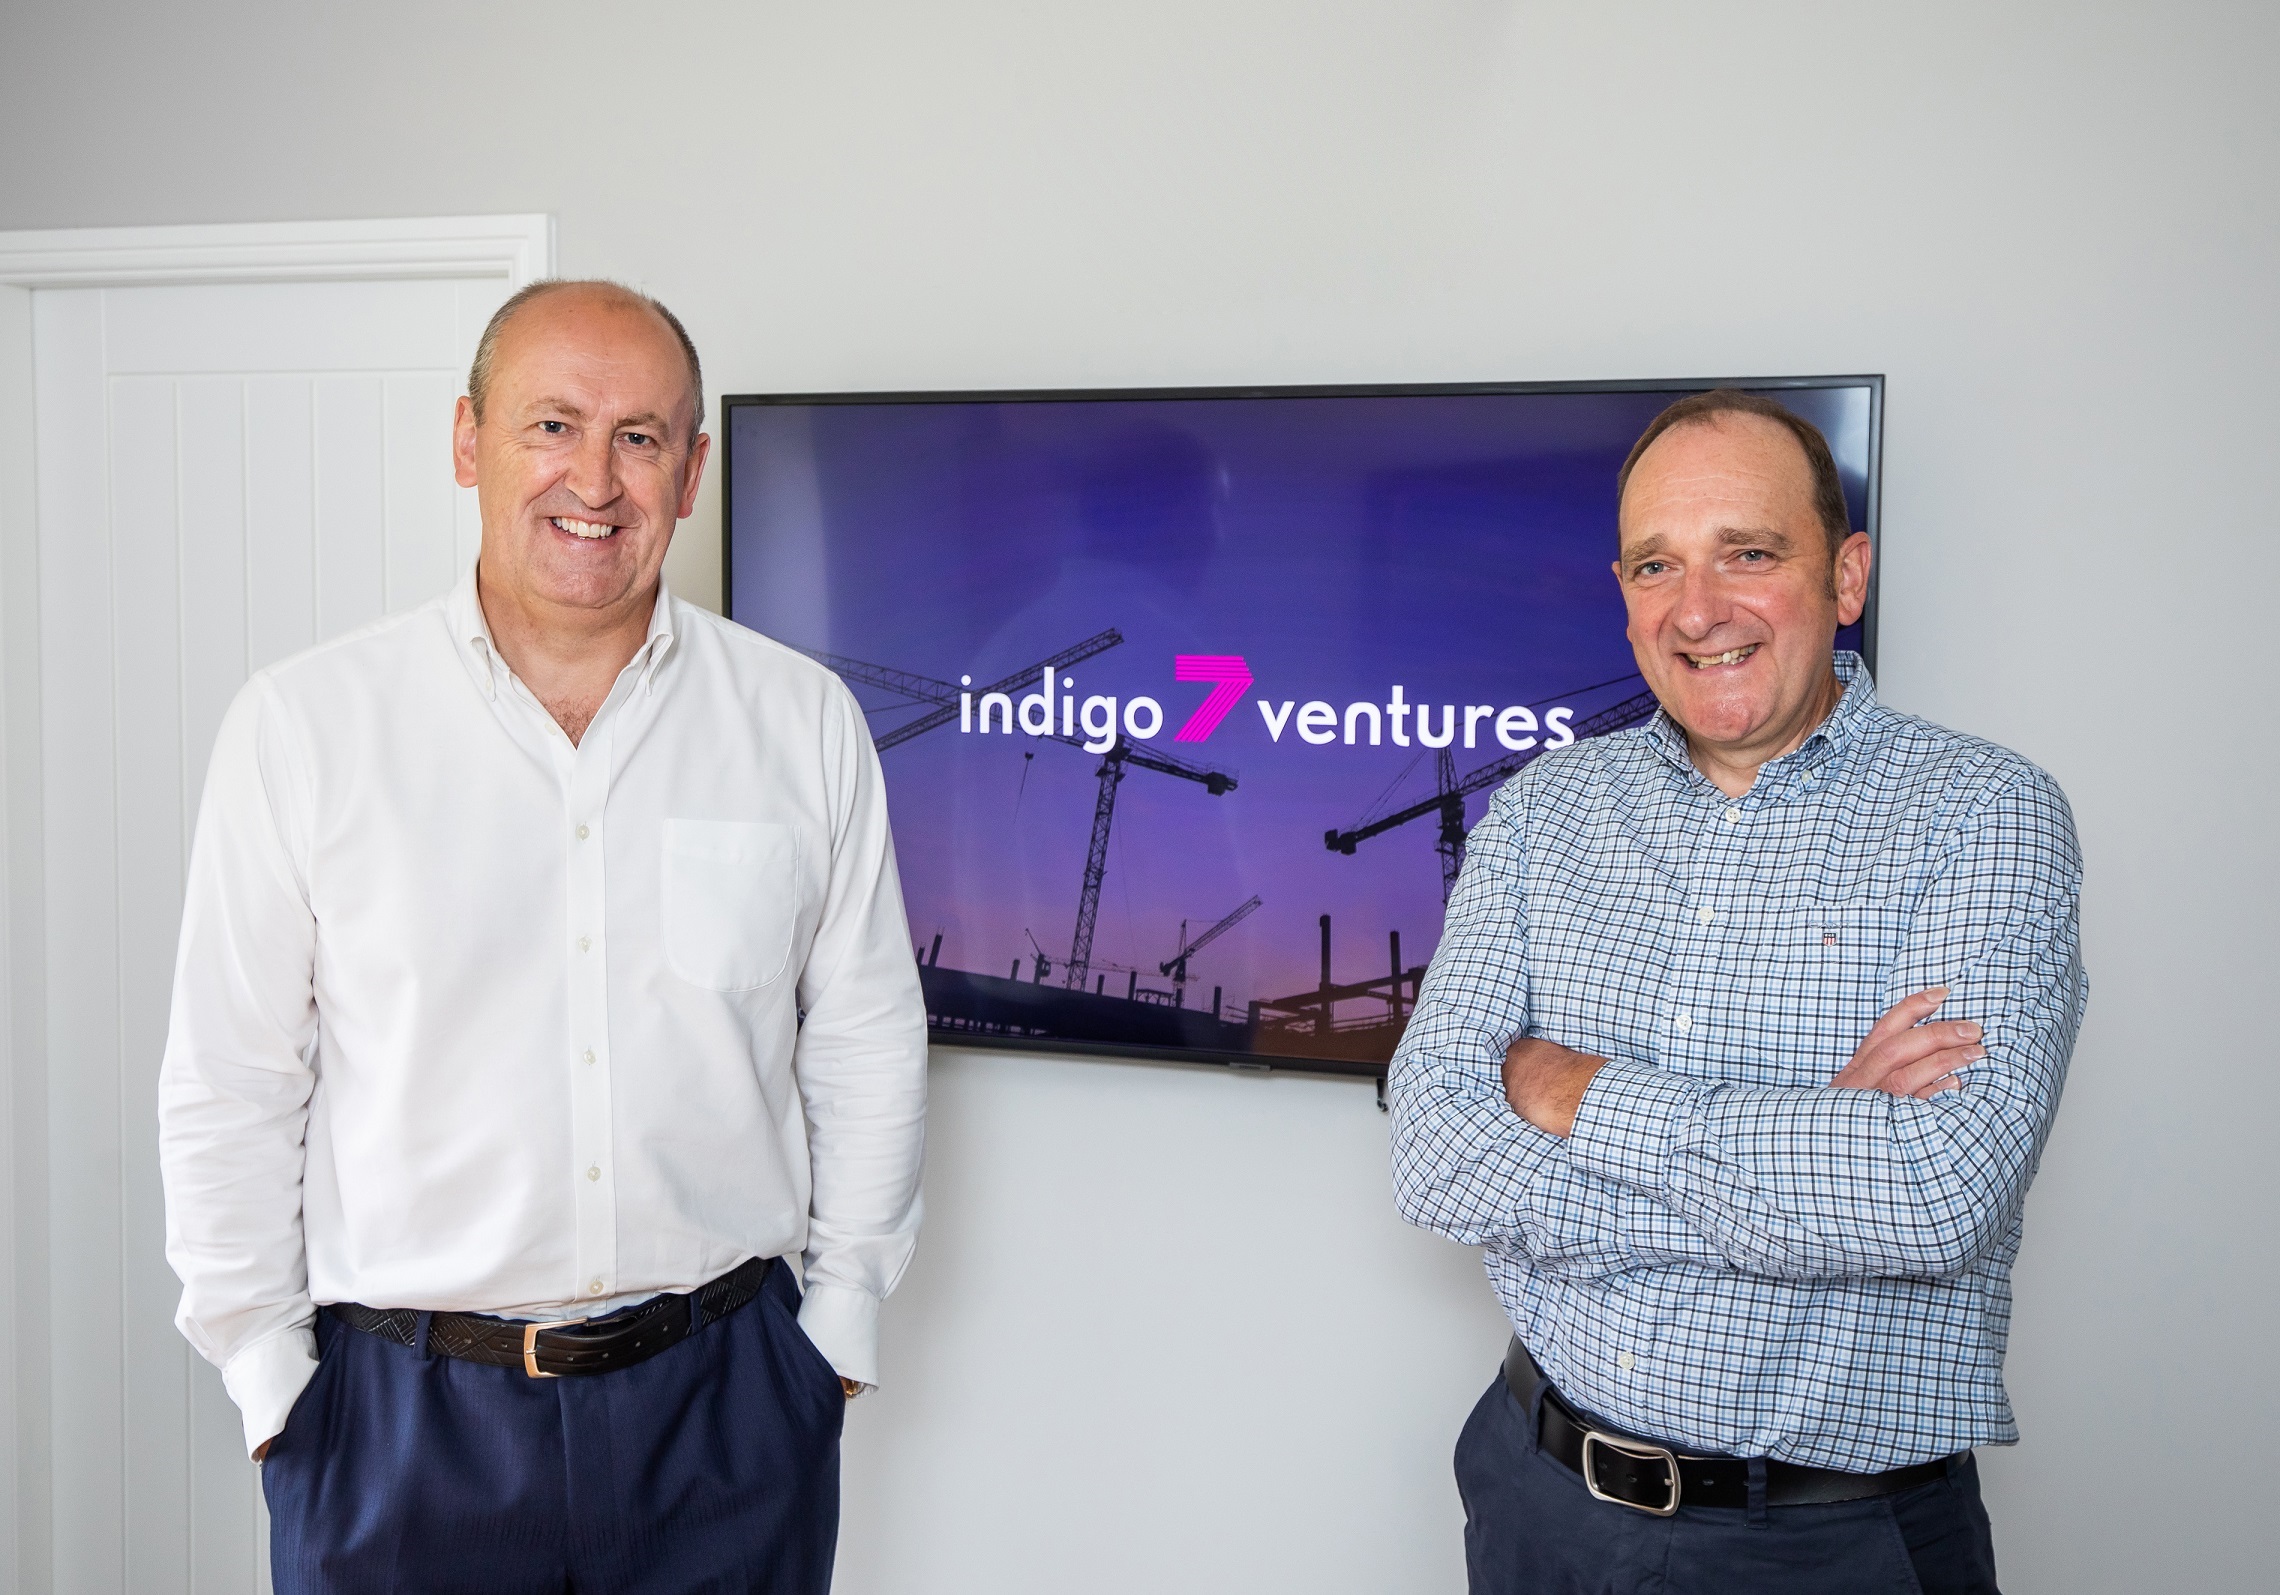 Scottish energy entrepreneurs launch multi-million pound business investment fund